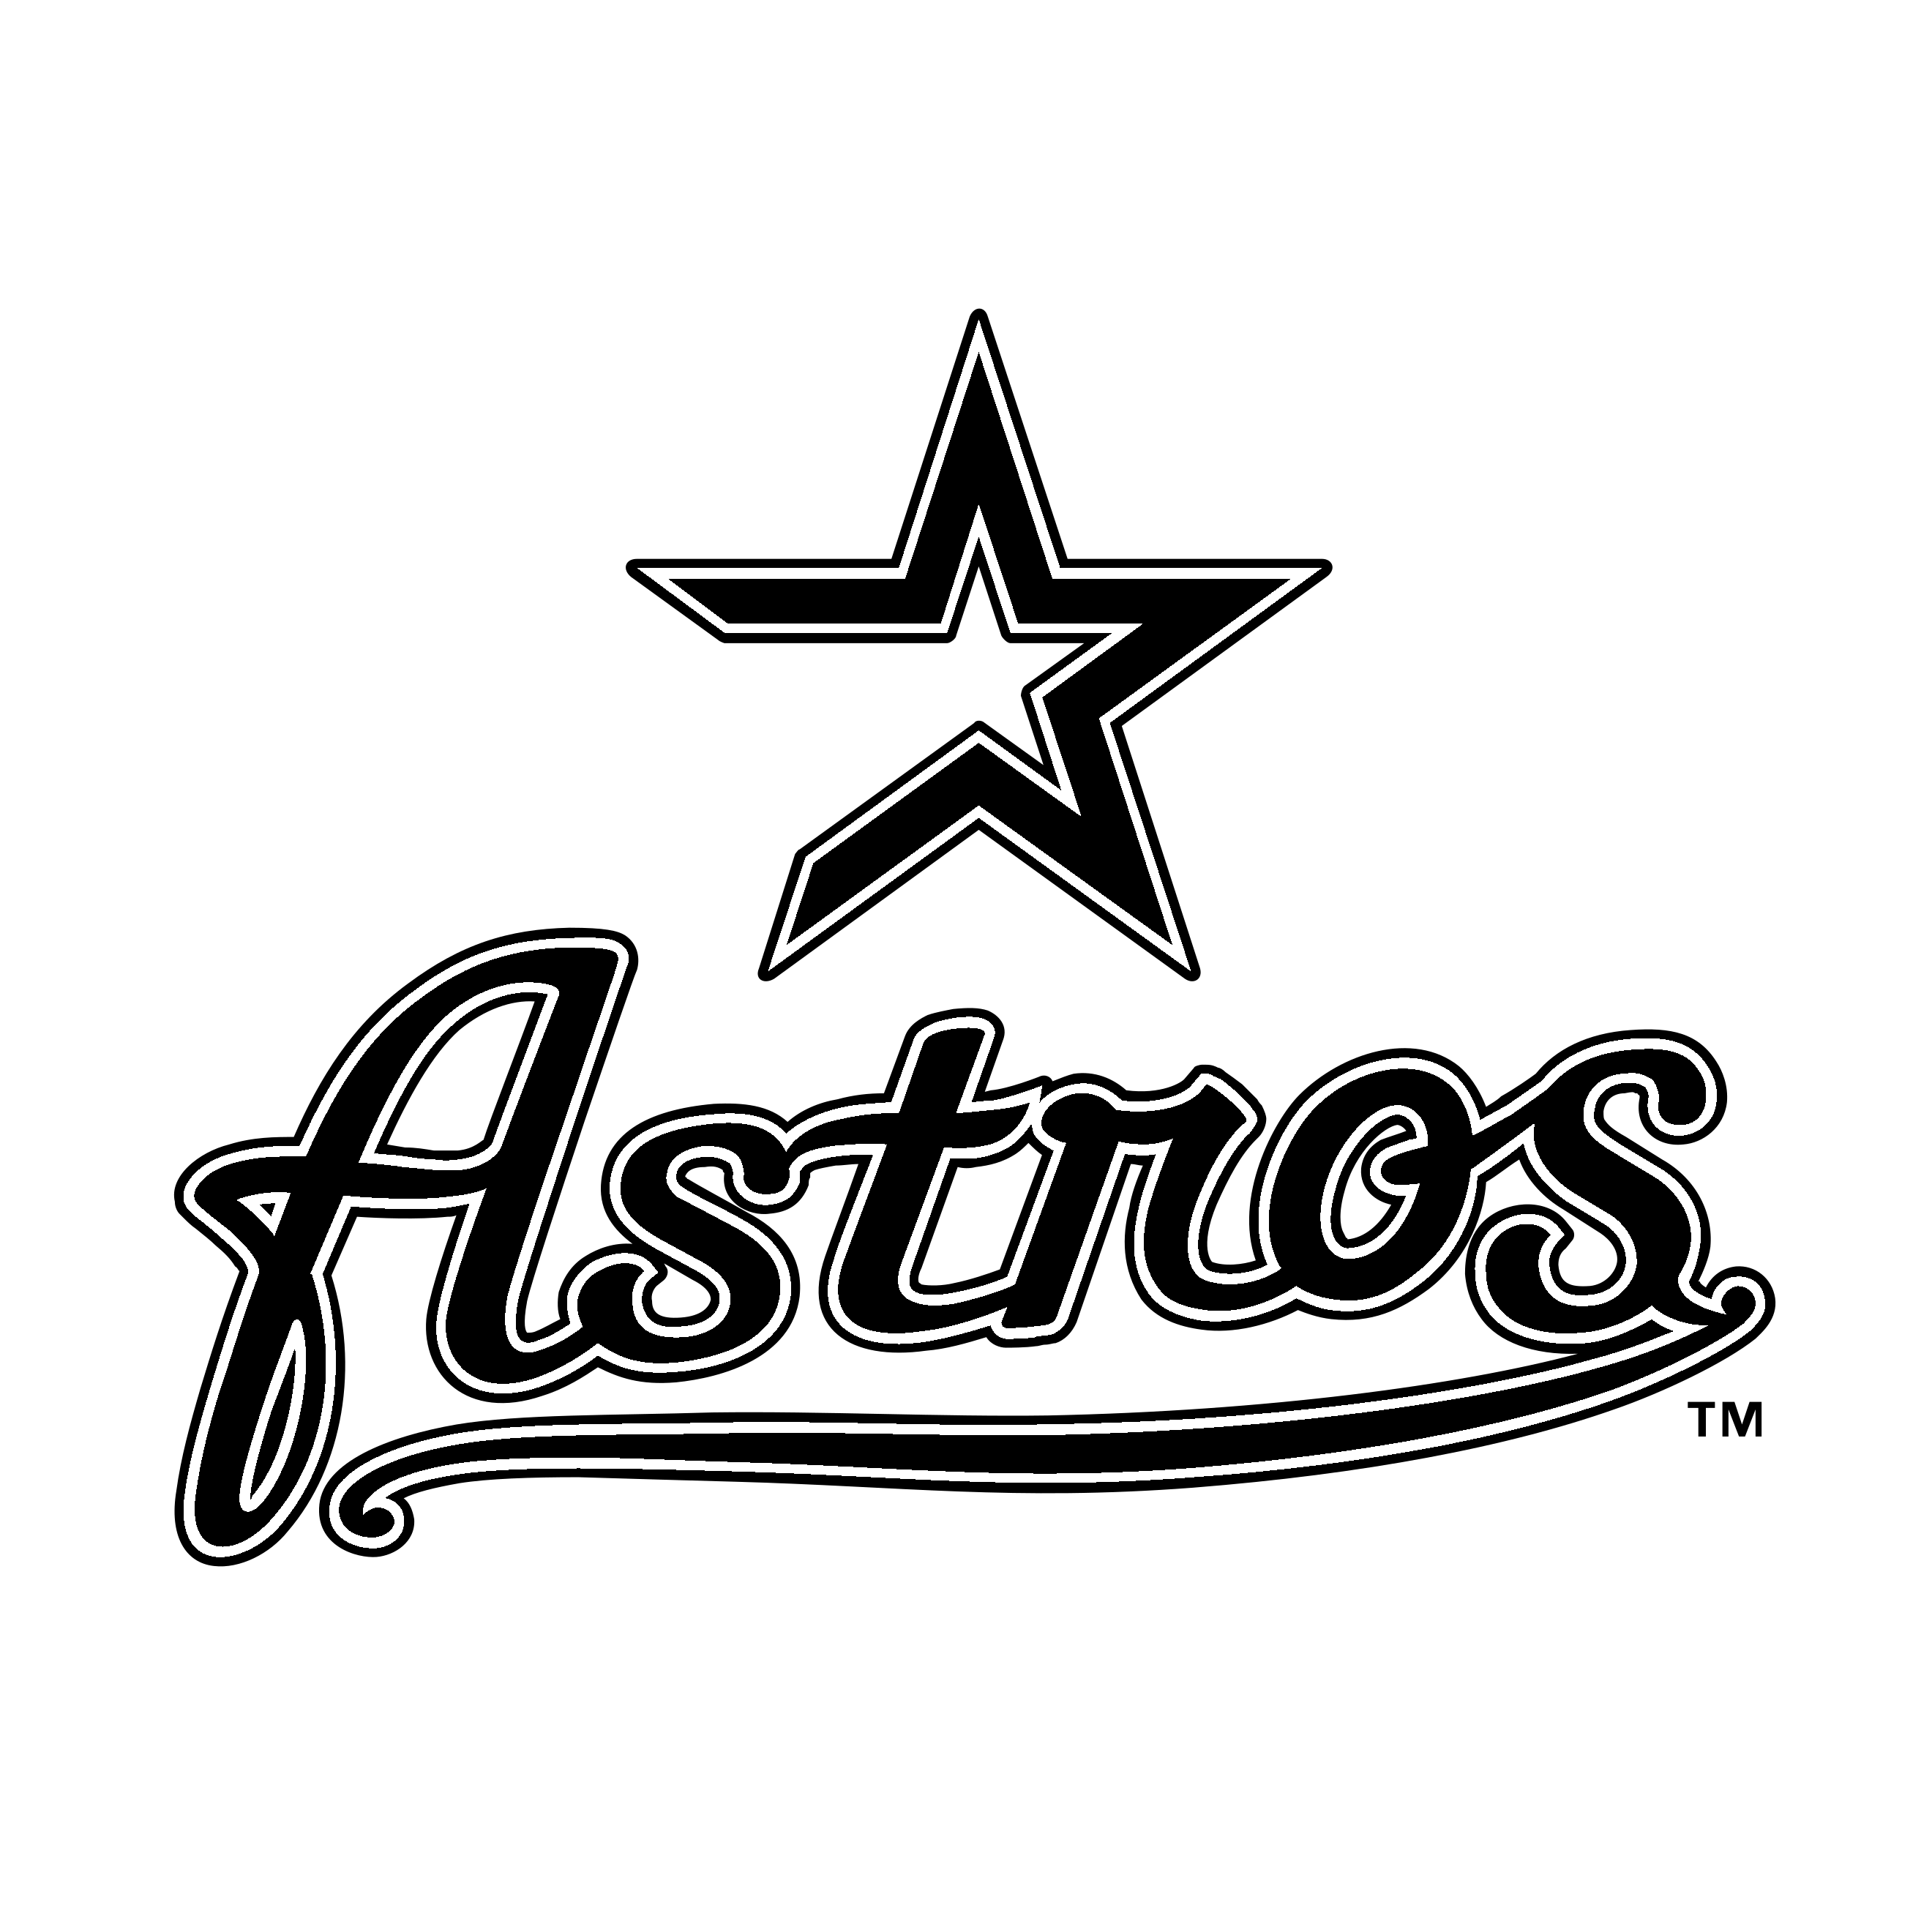 Houston Astros MLB Decal PNG Image in Transparent pngteam.com